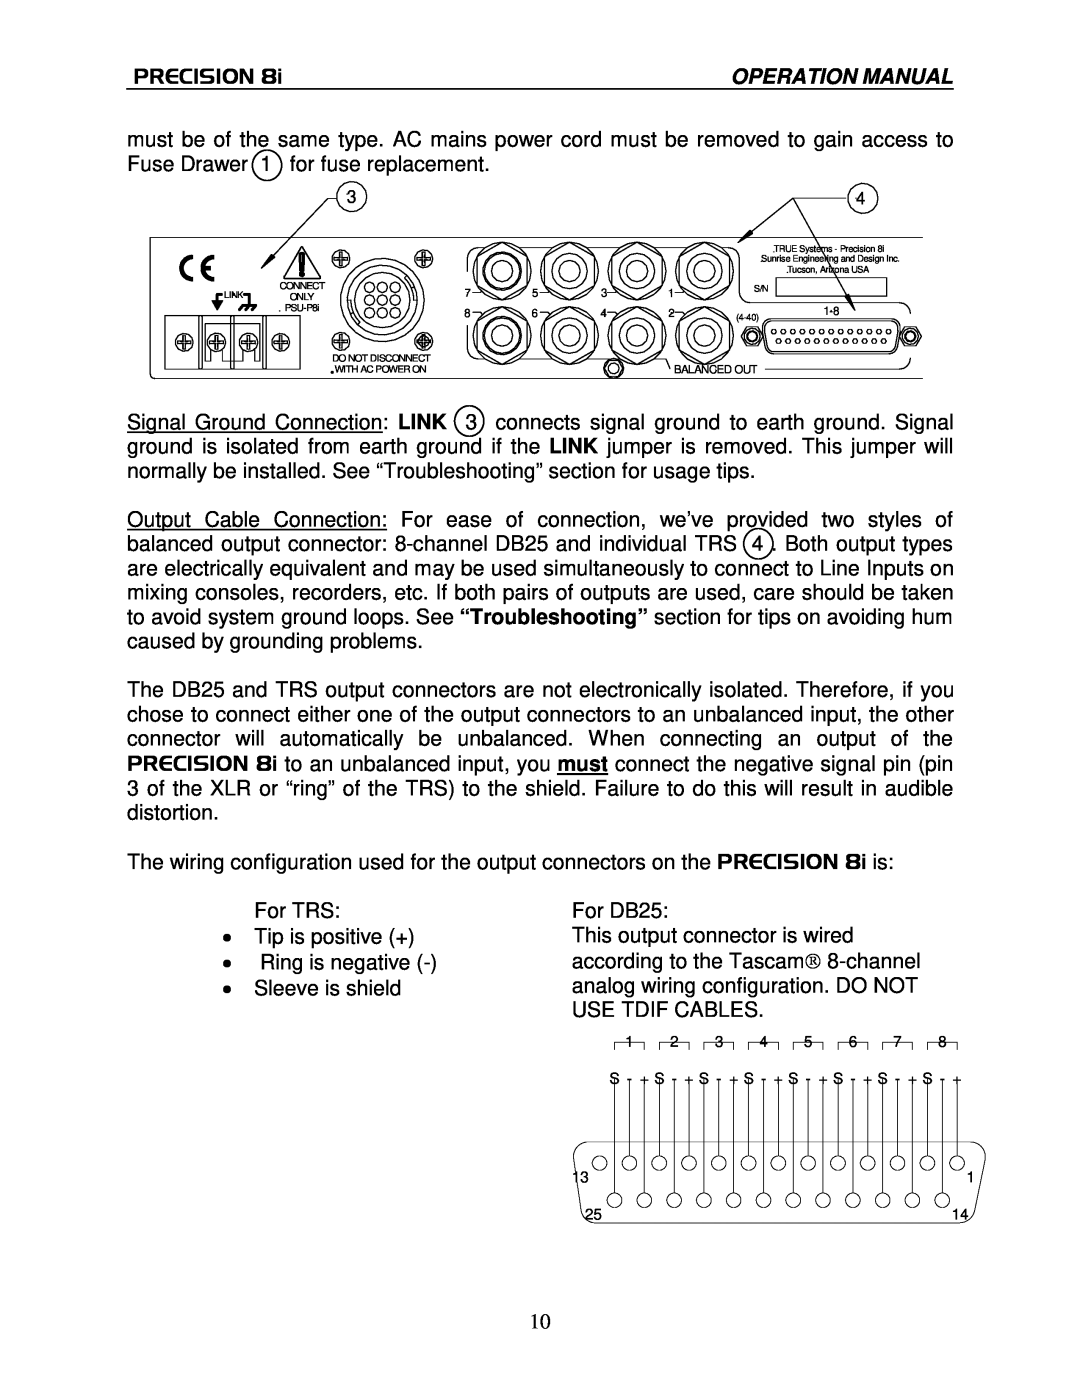 True Manufacturing Company PRECISION 8i operation manual Precision, For TRS 